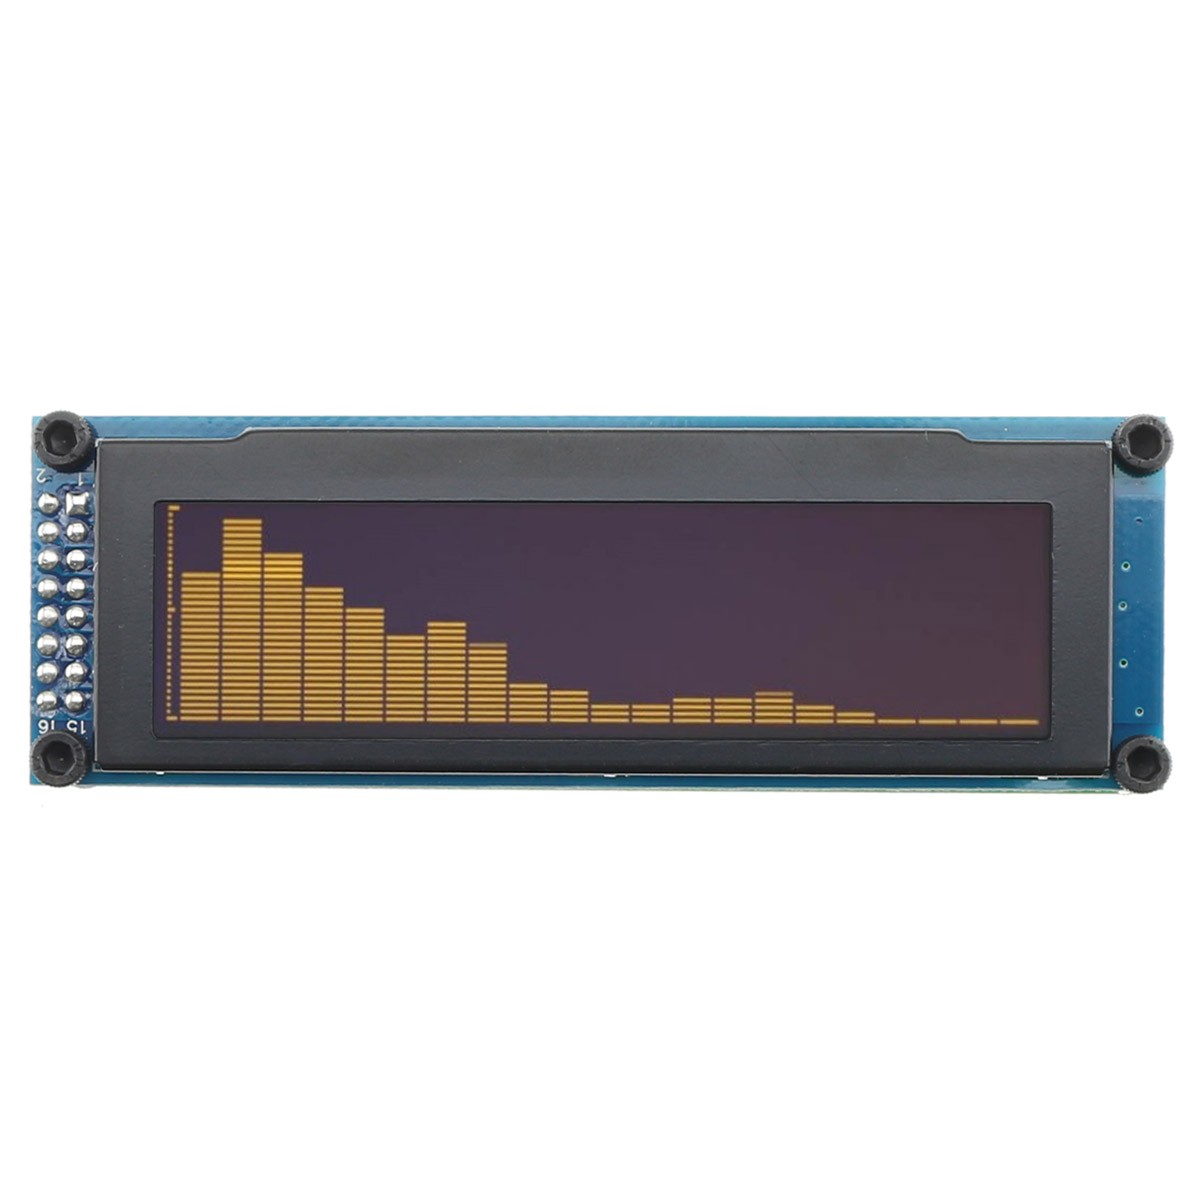 Module Spectrum Vumeter OLED Display 21 Bands